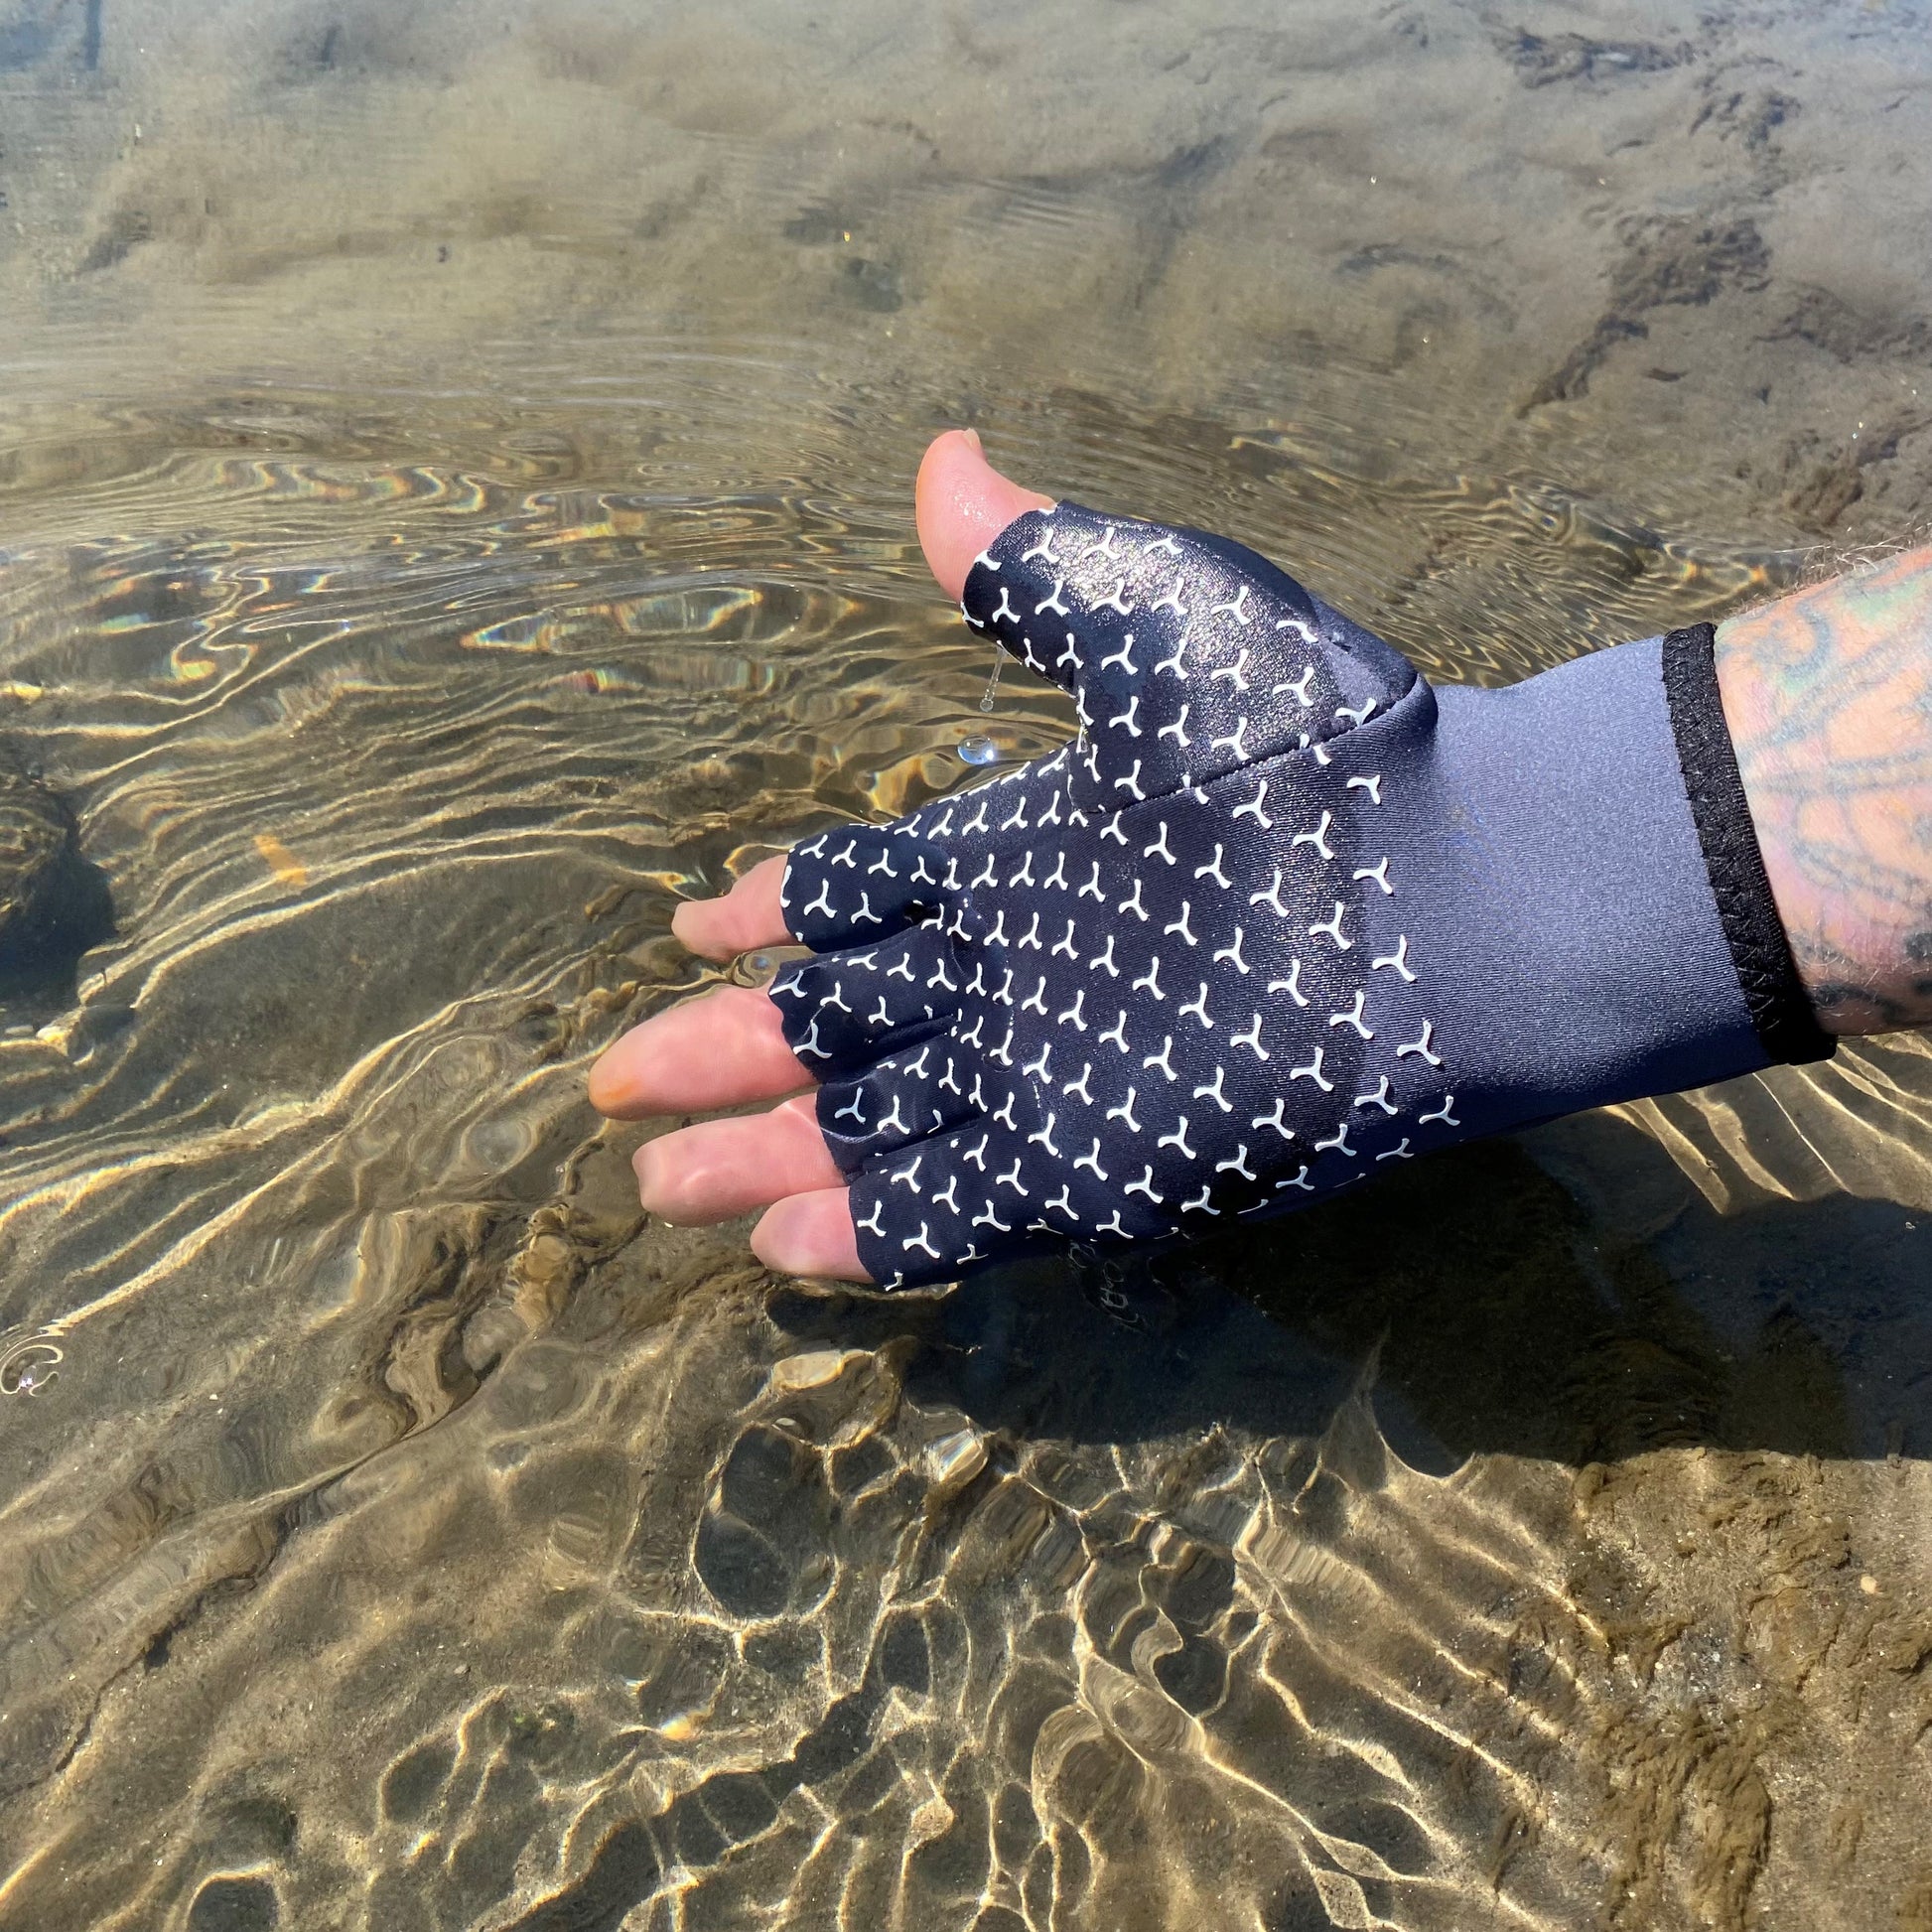 Glacier Glove Cold River Fingerless Gloves (Medium)